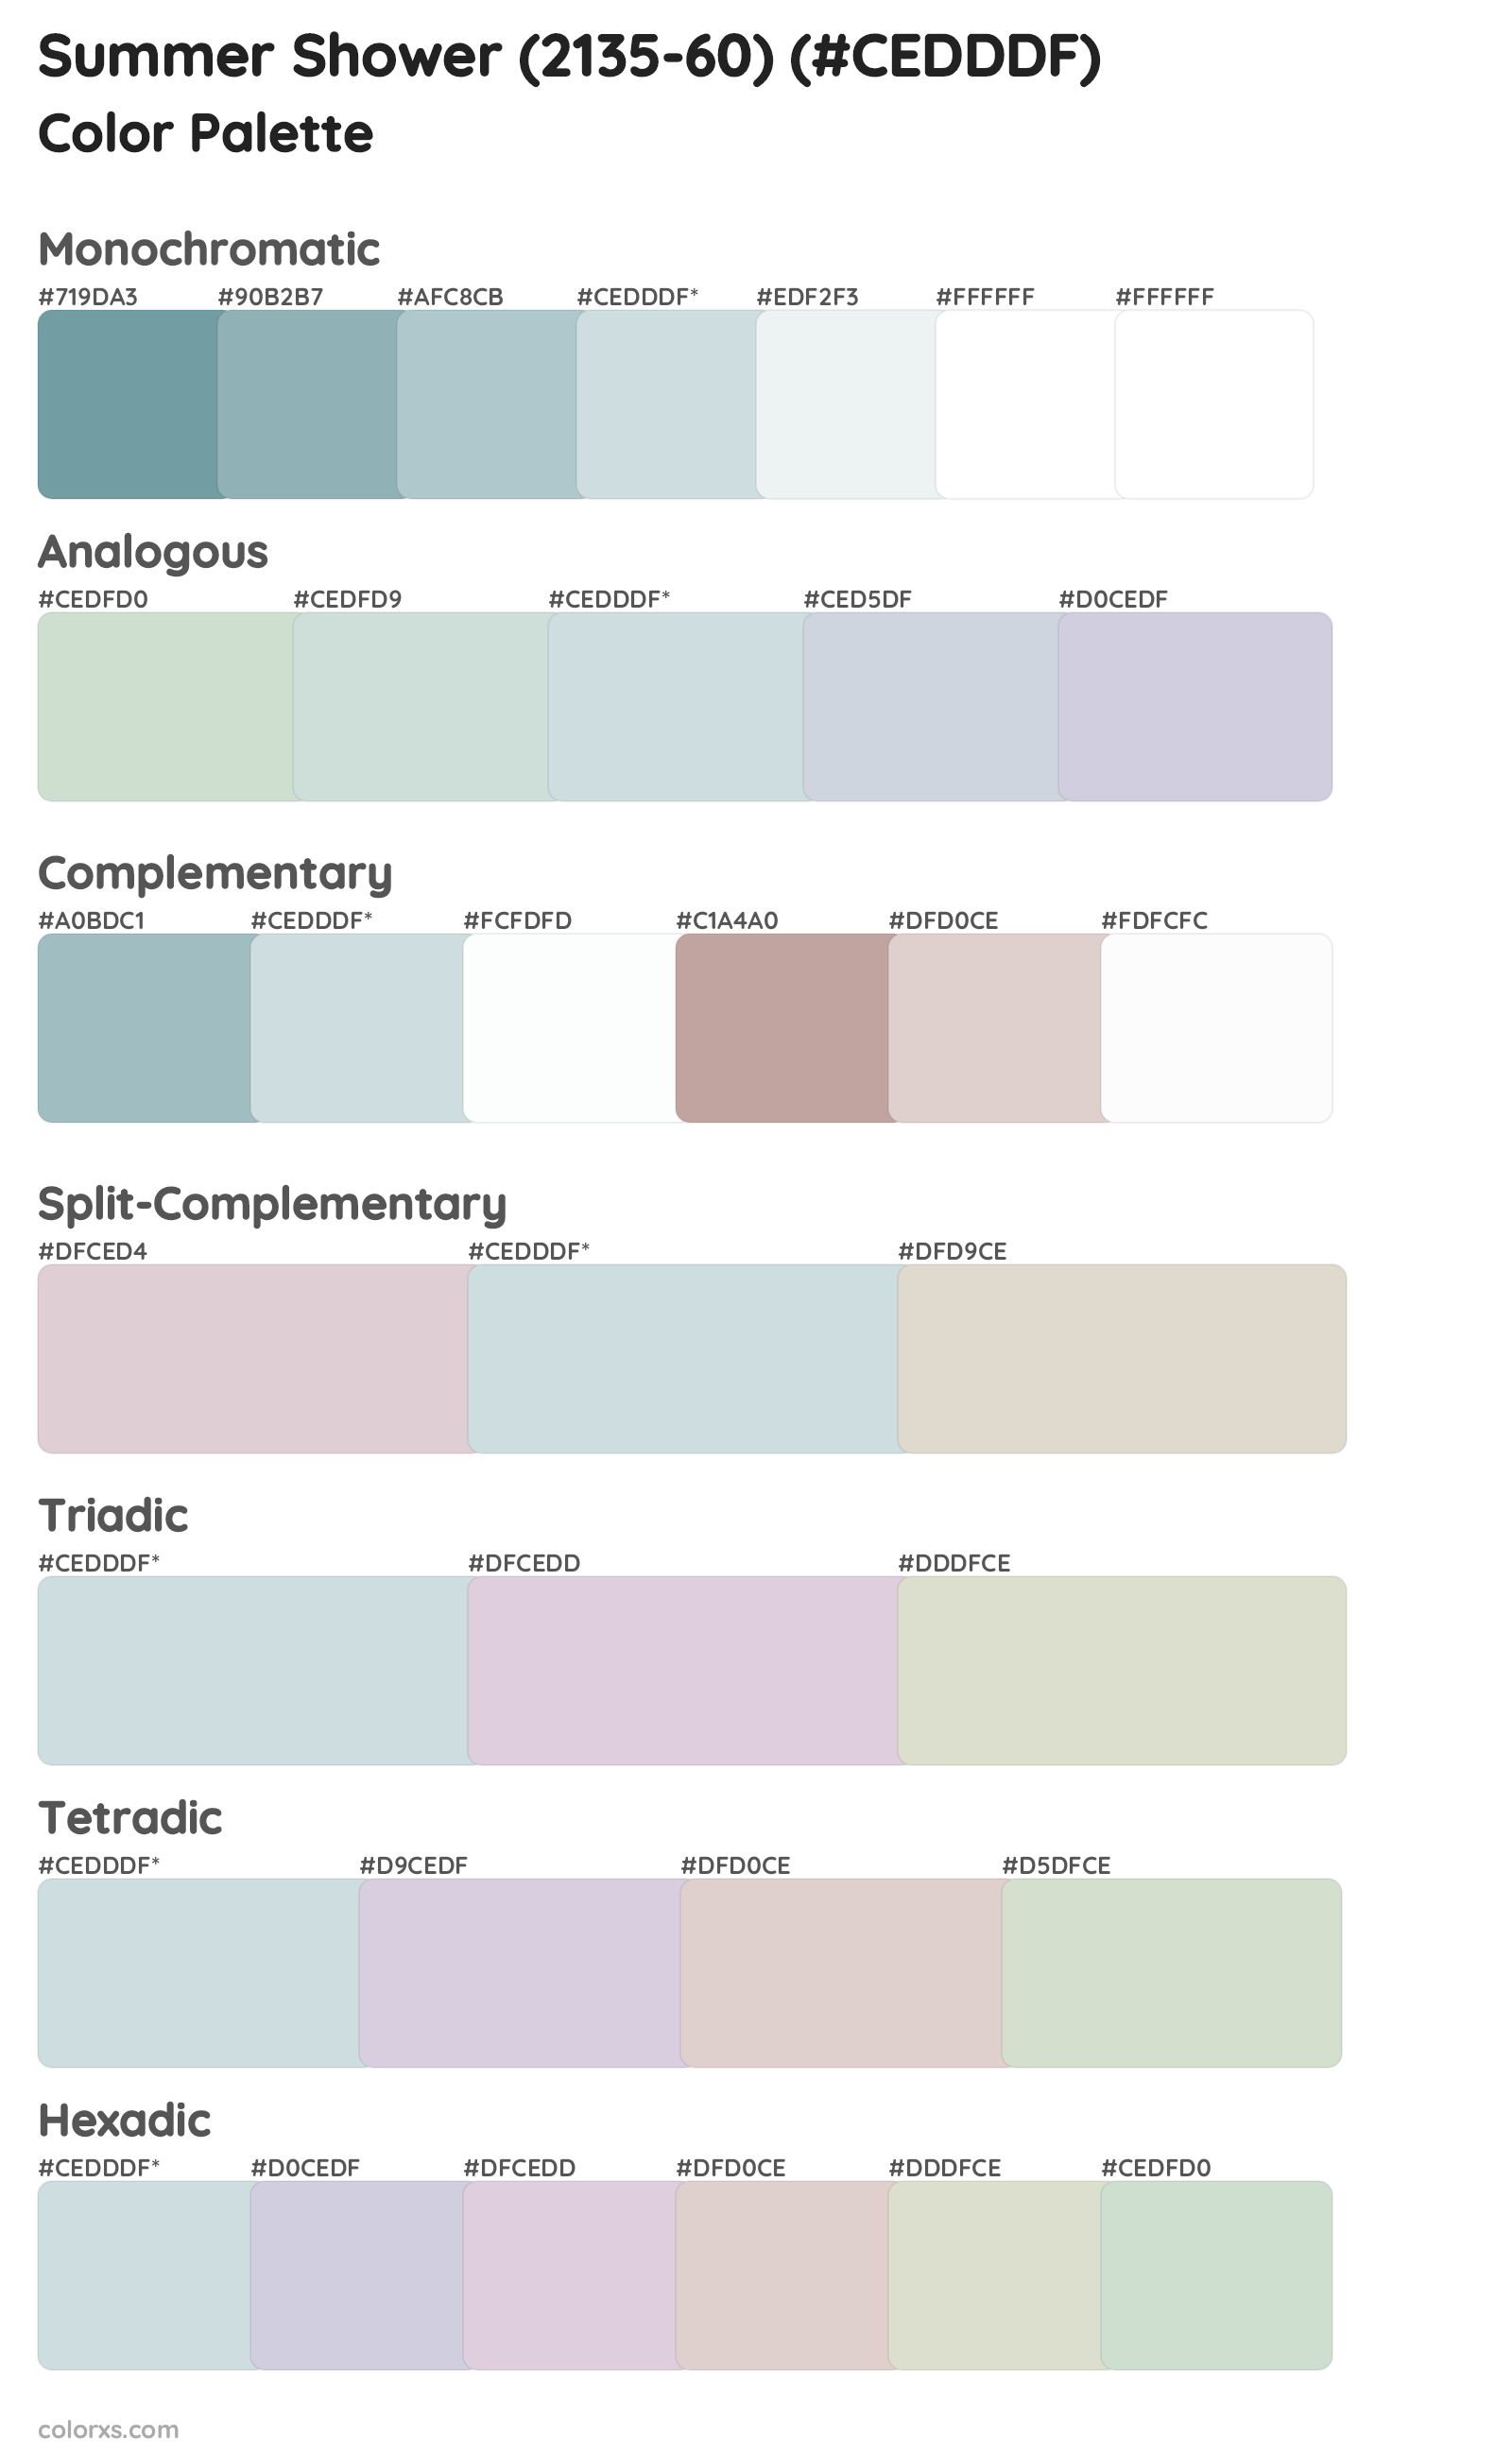 Summer Shower (2135-60) Color Scheme Palettes